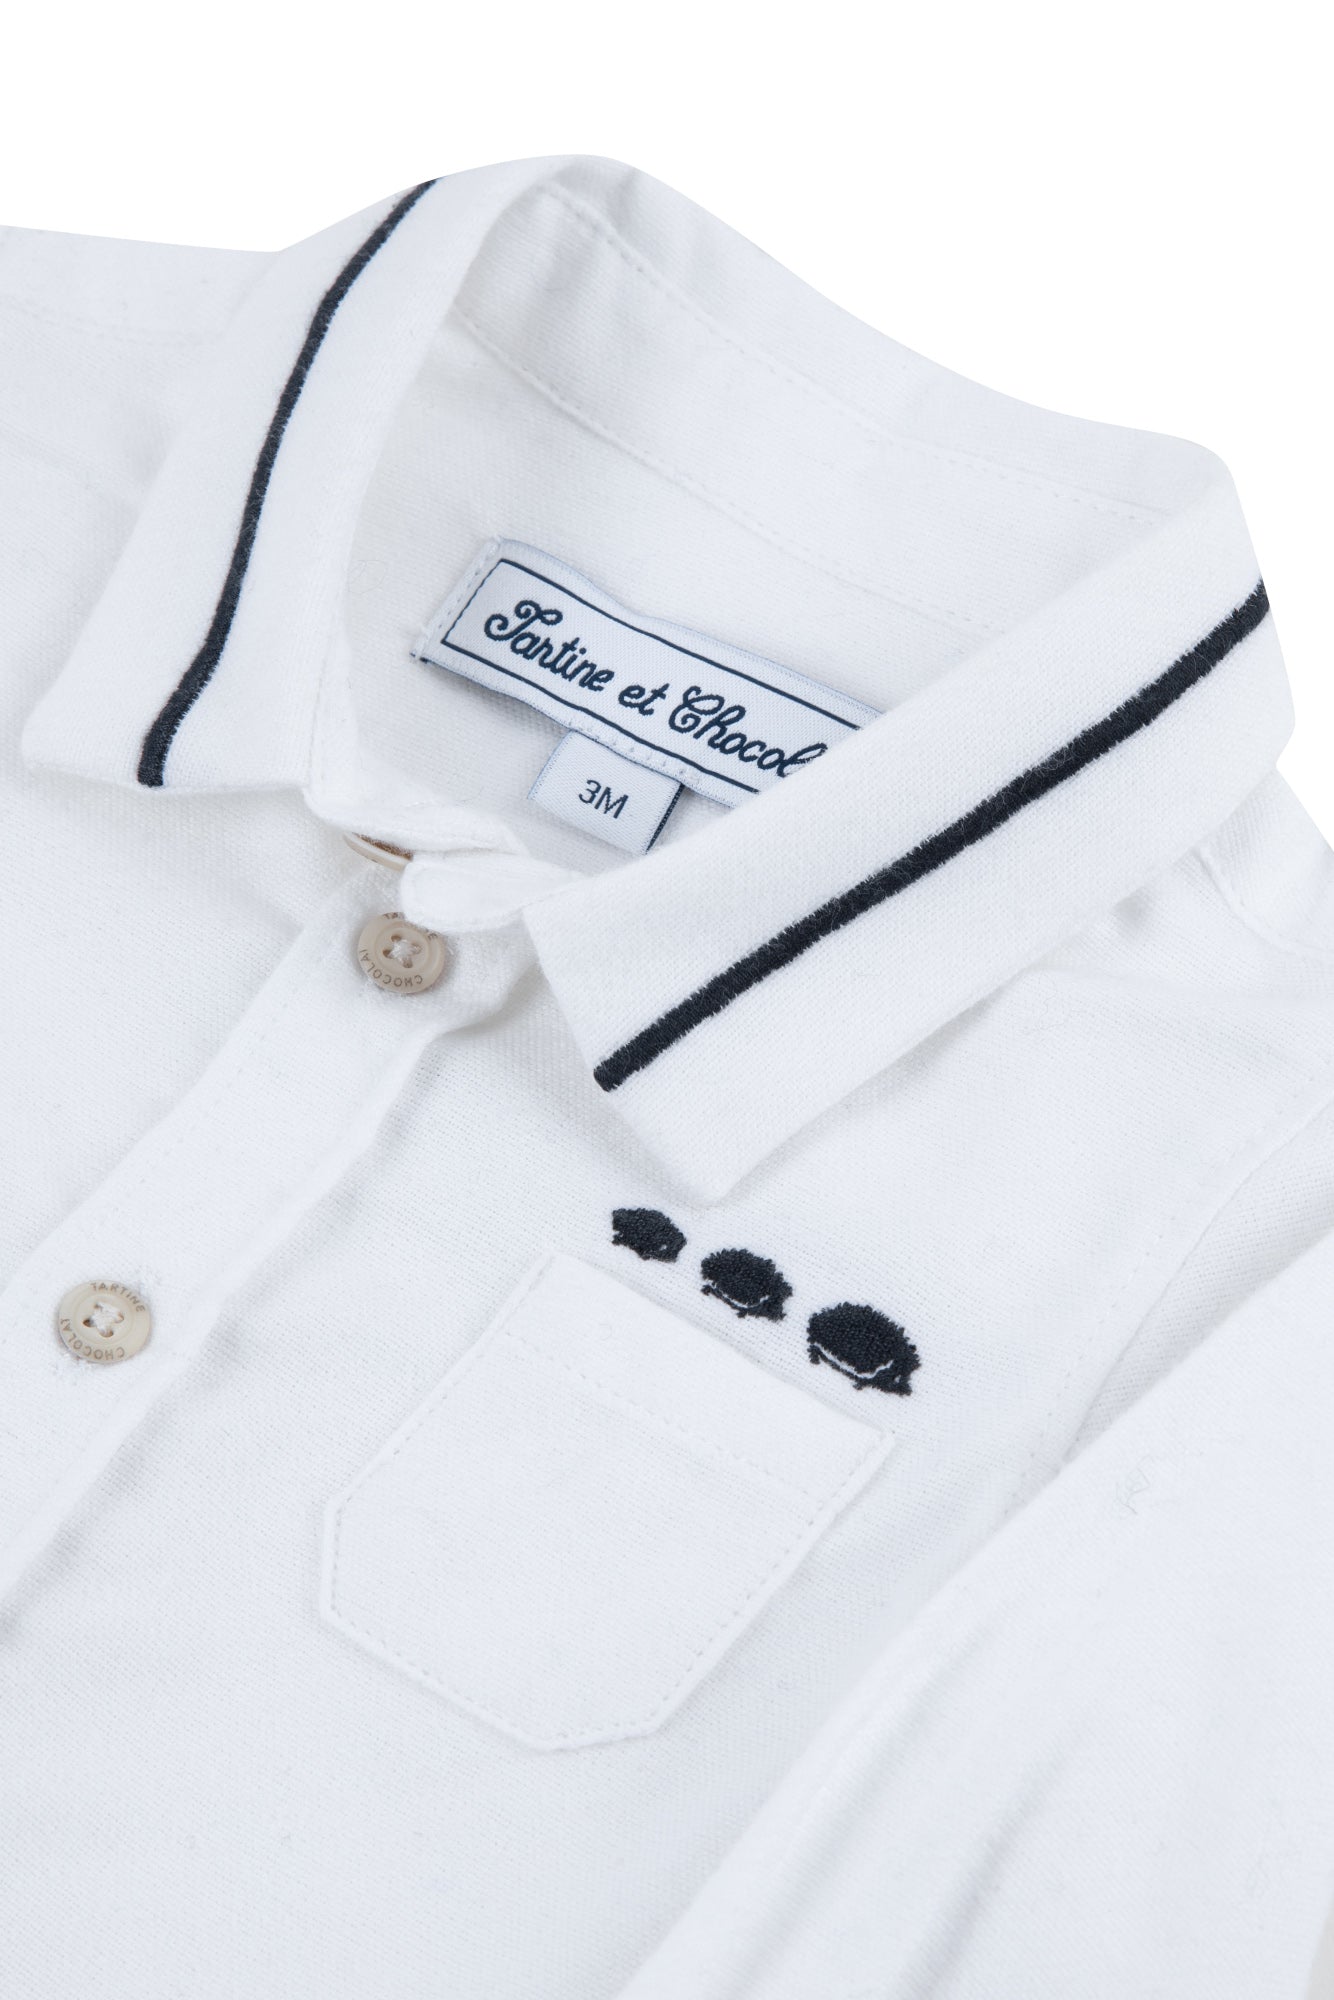 Tartine Boy's LS Button Up Shirt w/ Collar Piping